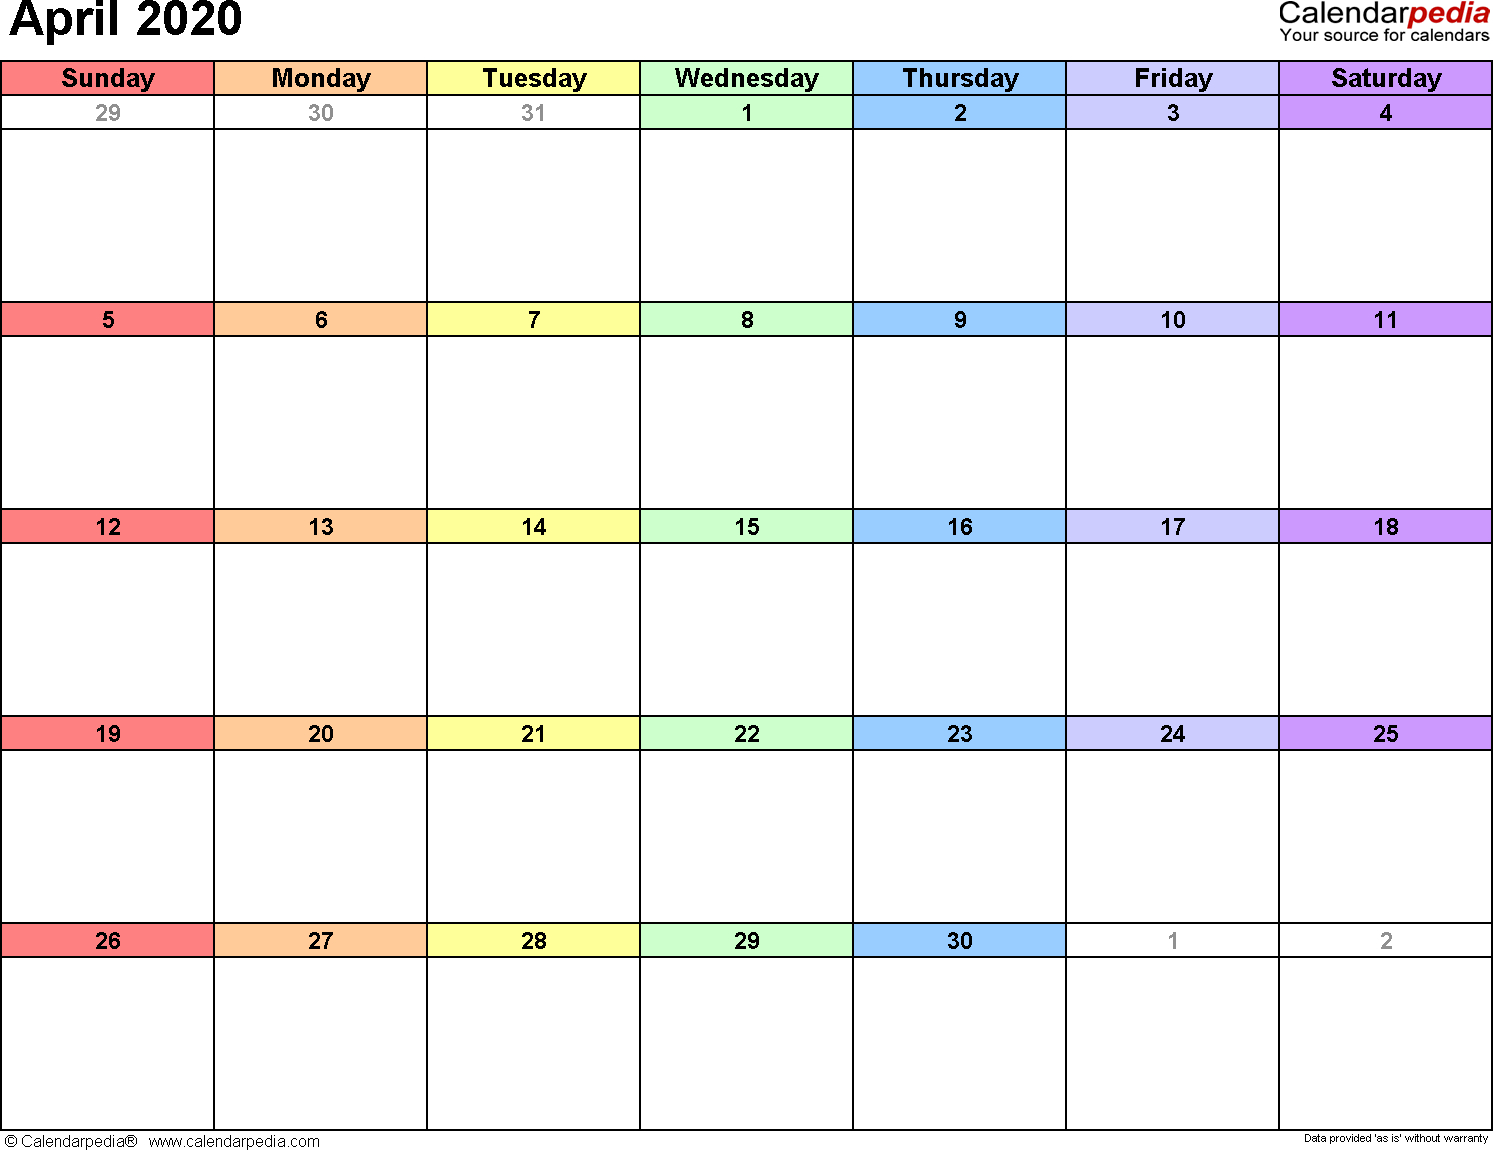 April 2020 Calendars For Word, Excel &amp; Pdf